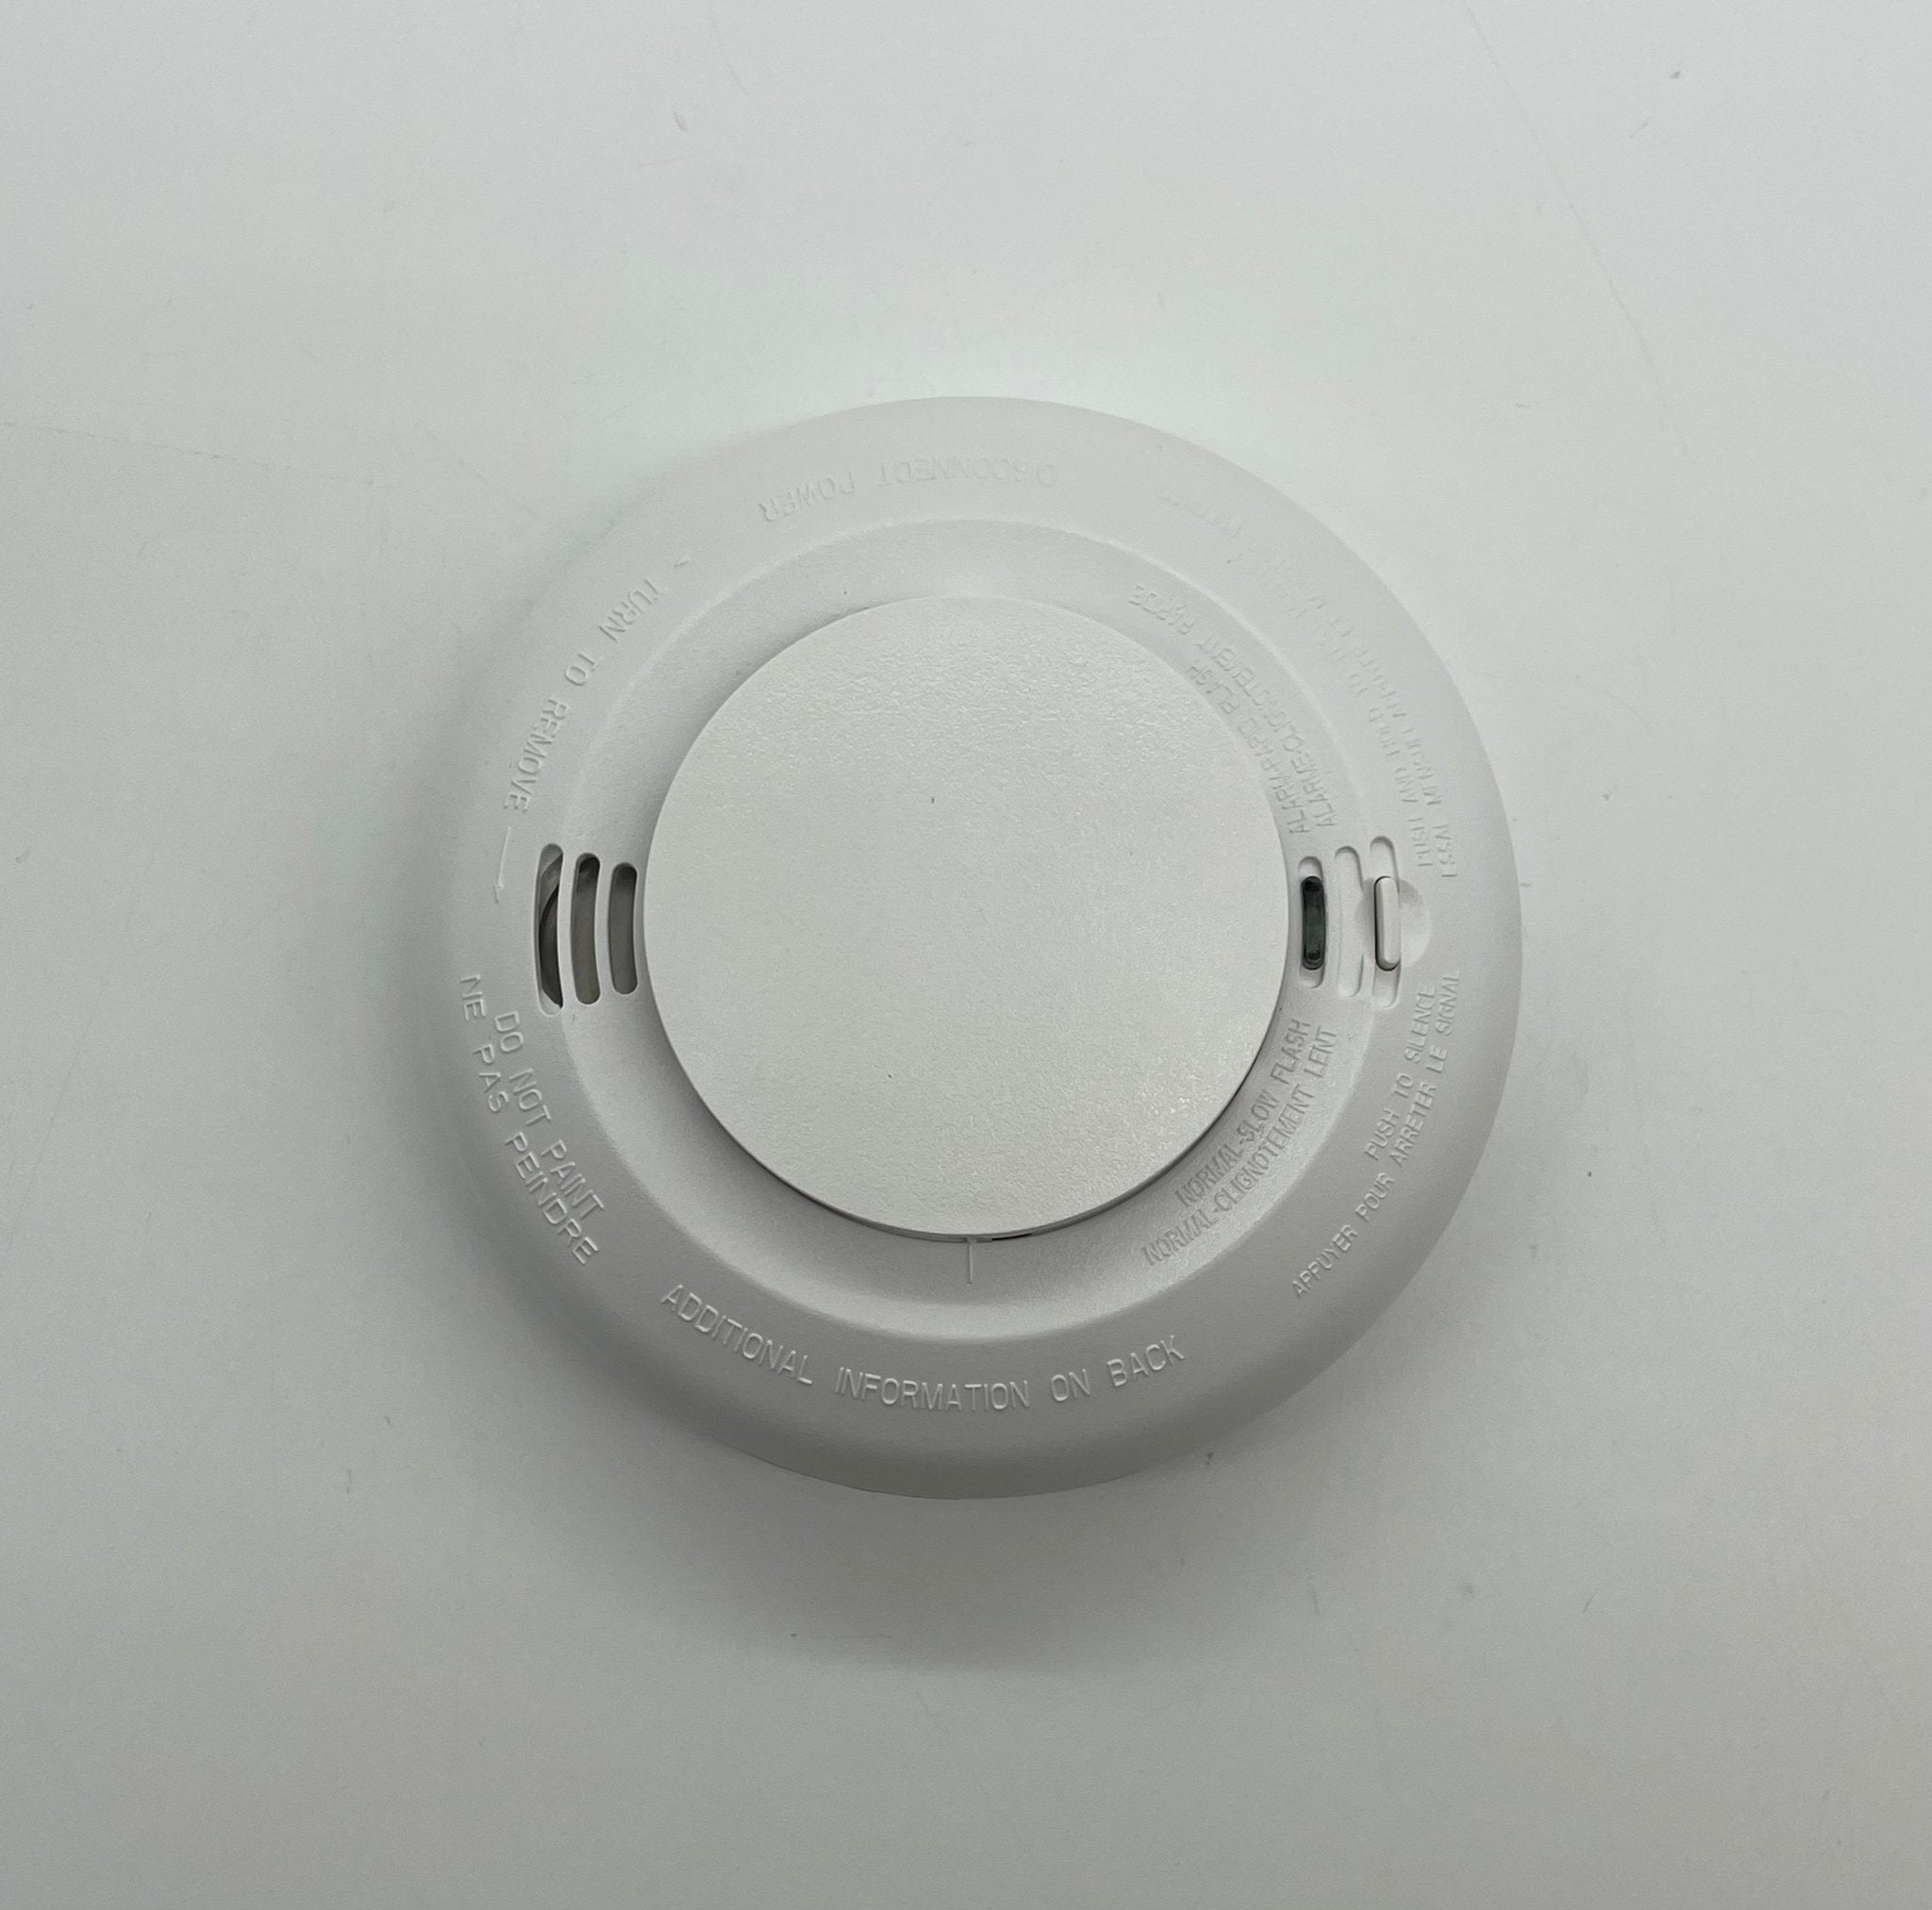 System Sensor 2012JA - The Fire Alarm Supplier